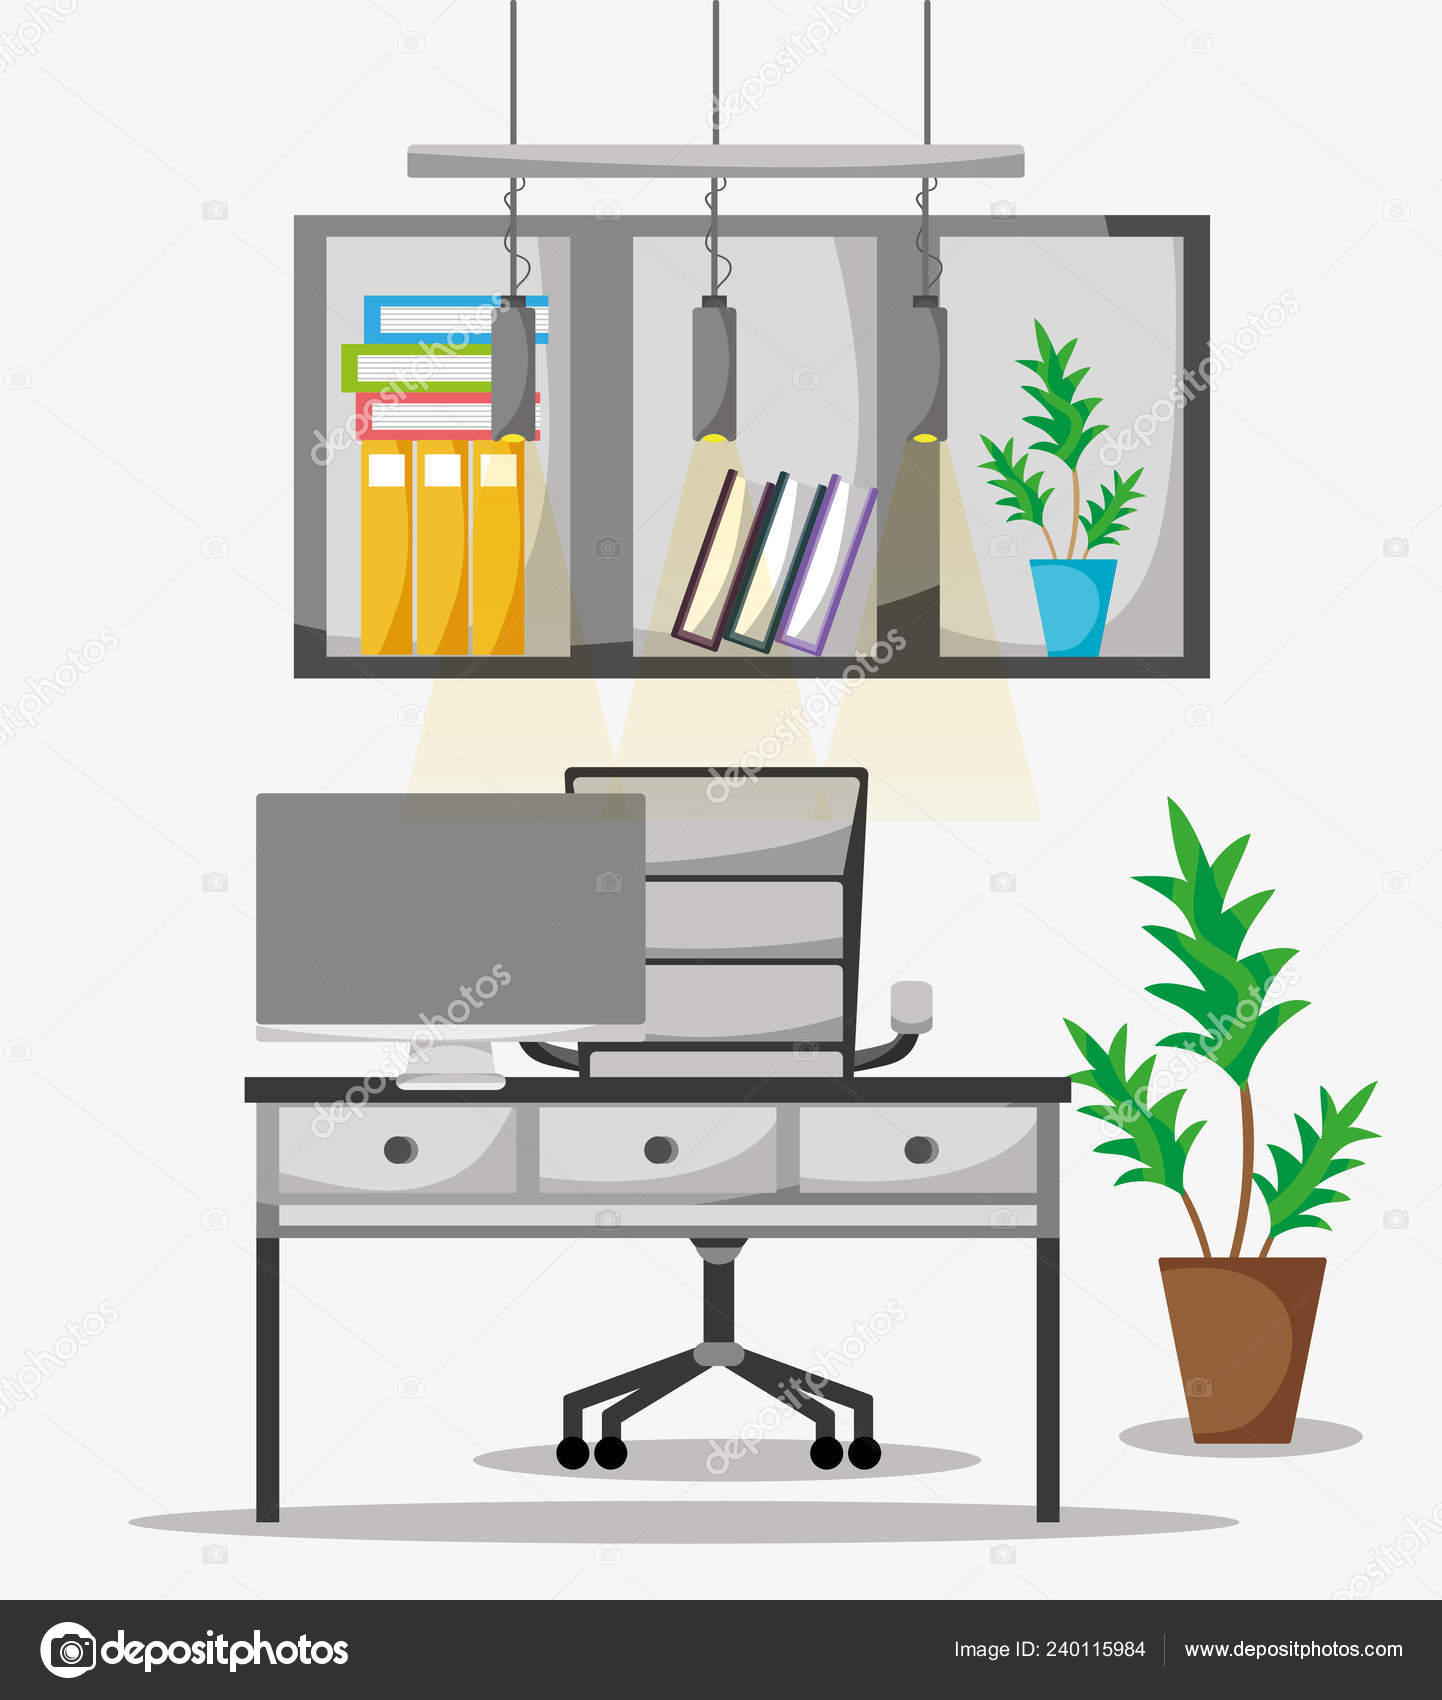 https://st4.depositphotos.com/11953928/24011/v/1600/depositphotos_240115984-stock-illustration-office-flat-desk-work-accessories.jpg